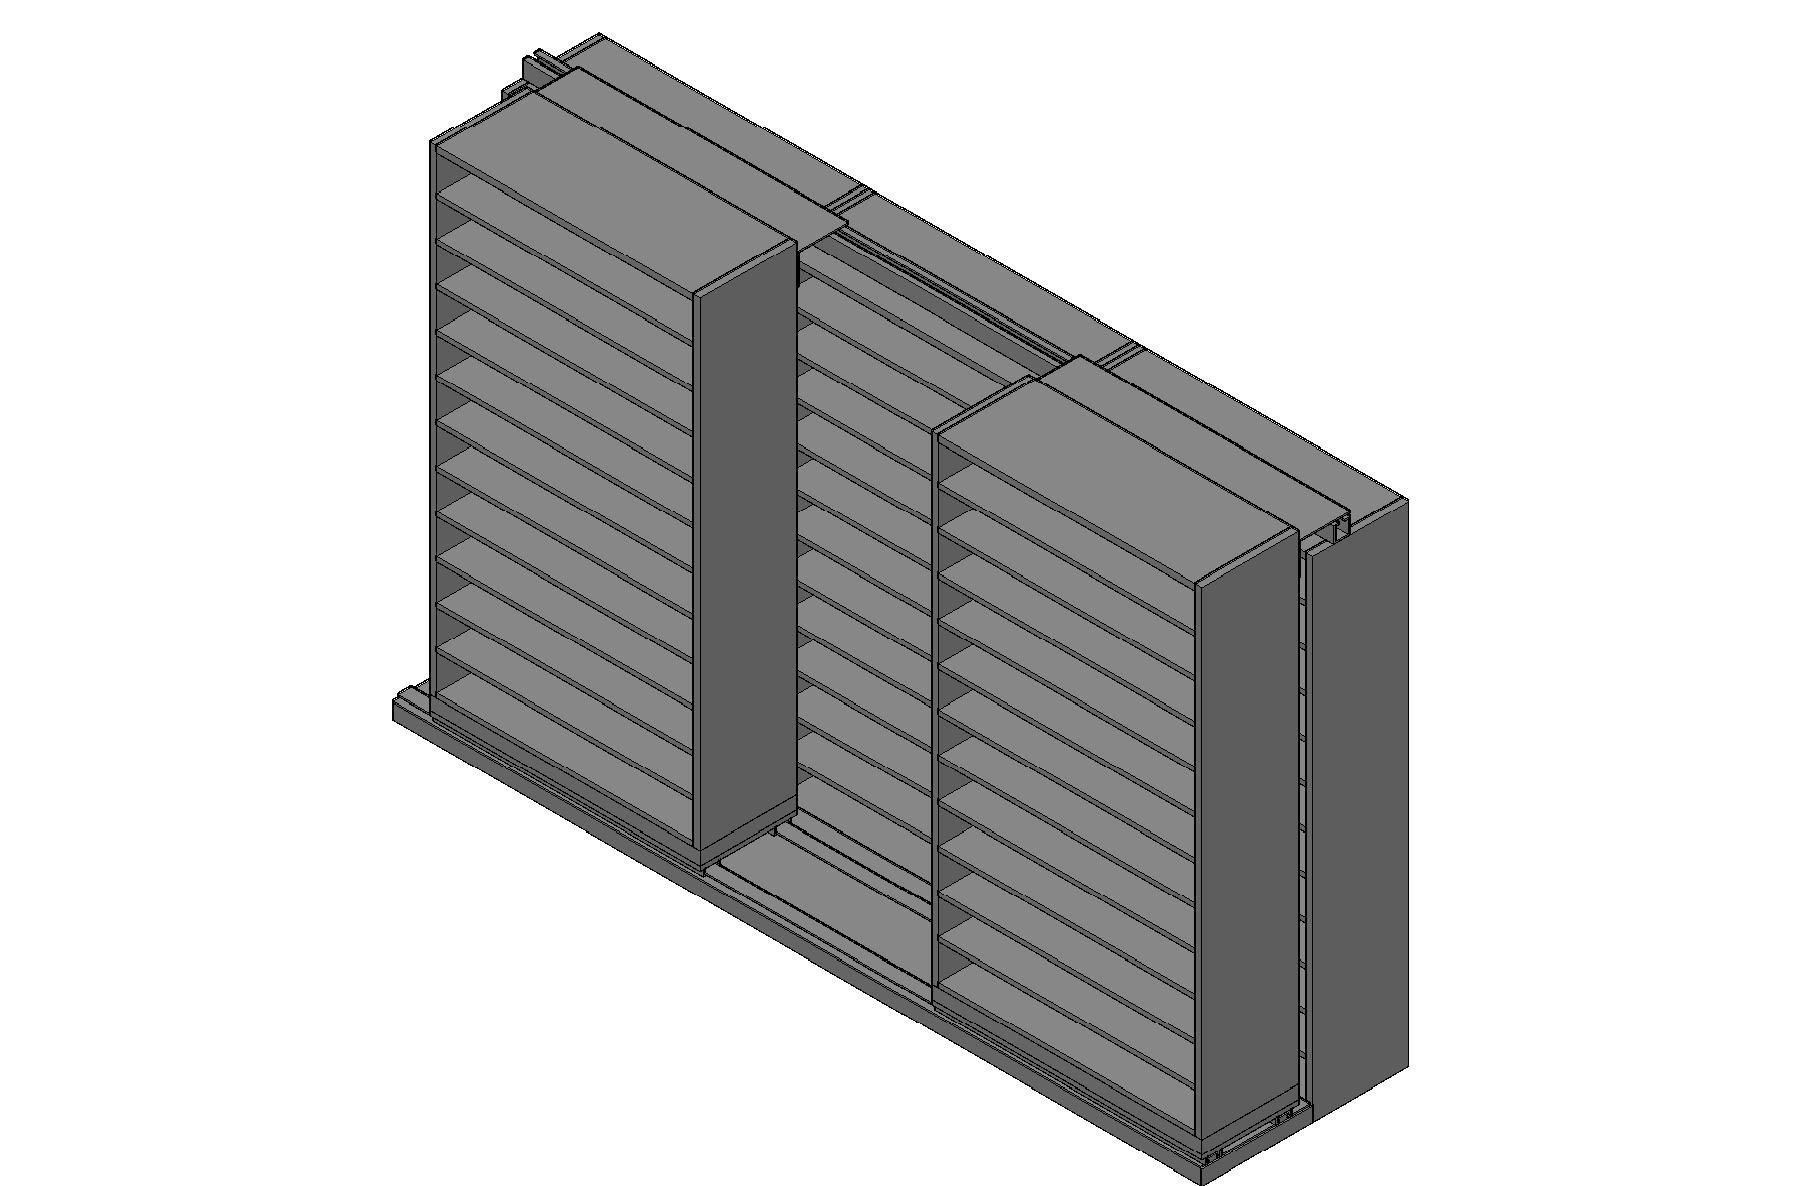 Bin Size Sliding Shelves - 2 Rows Deep - 12 Levels - (42" x 15" Shelves) - 130" Total Width